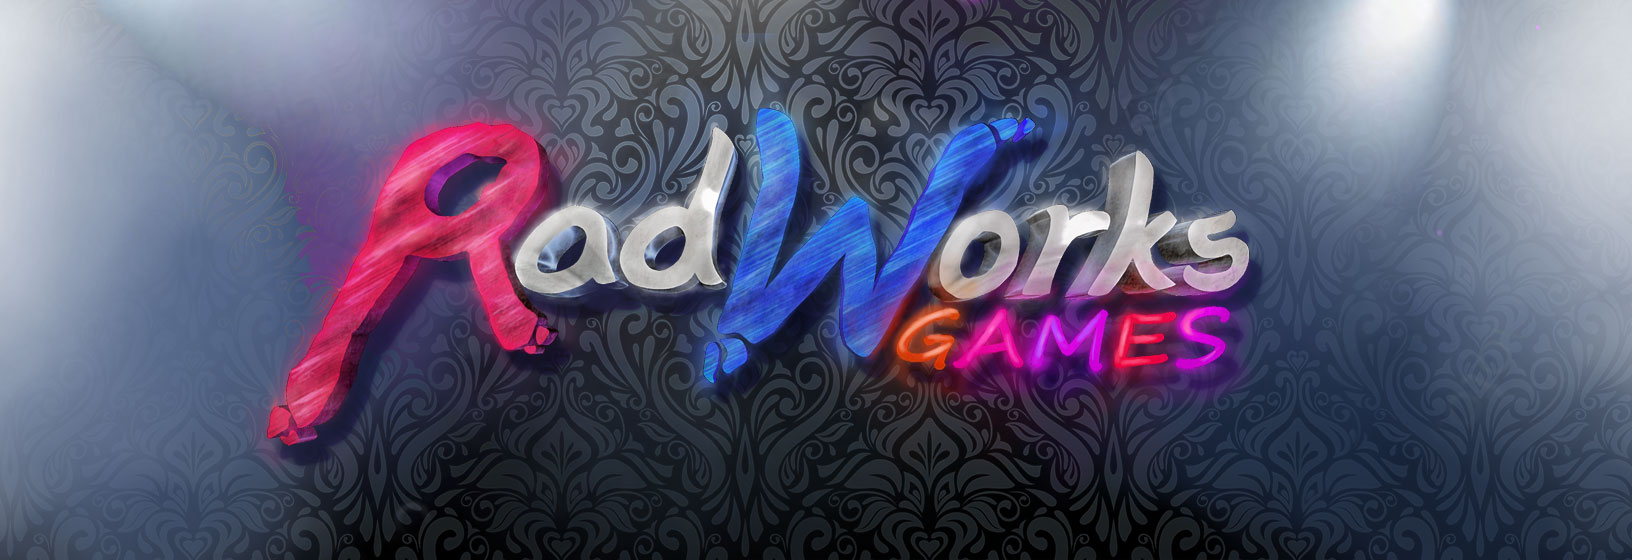 RadWorksGames-W2